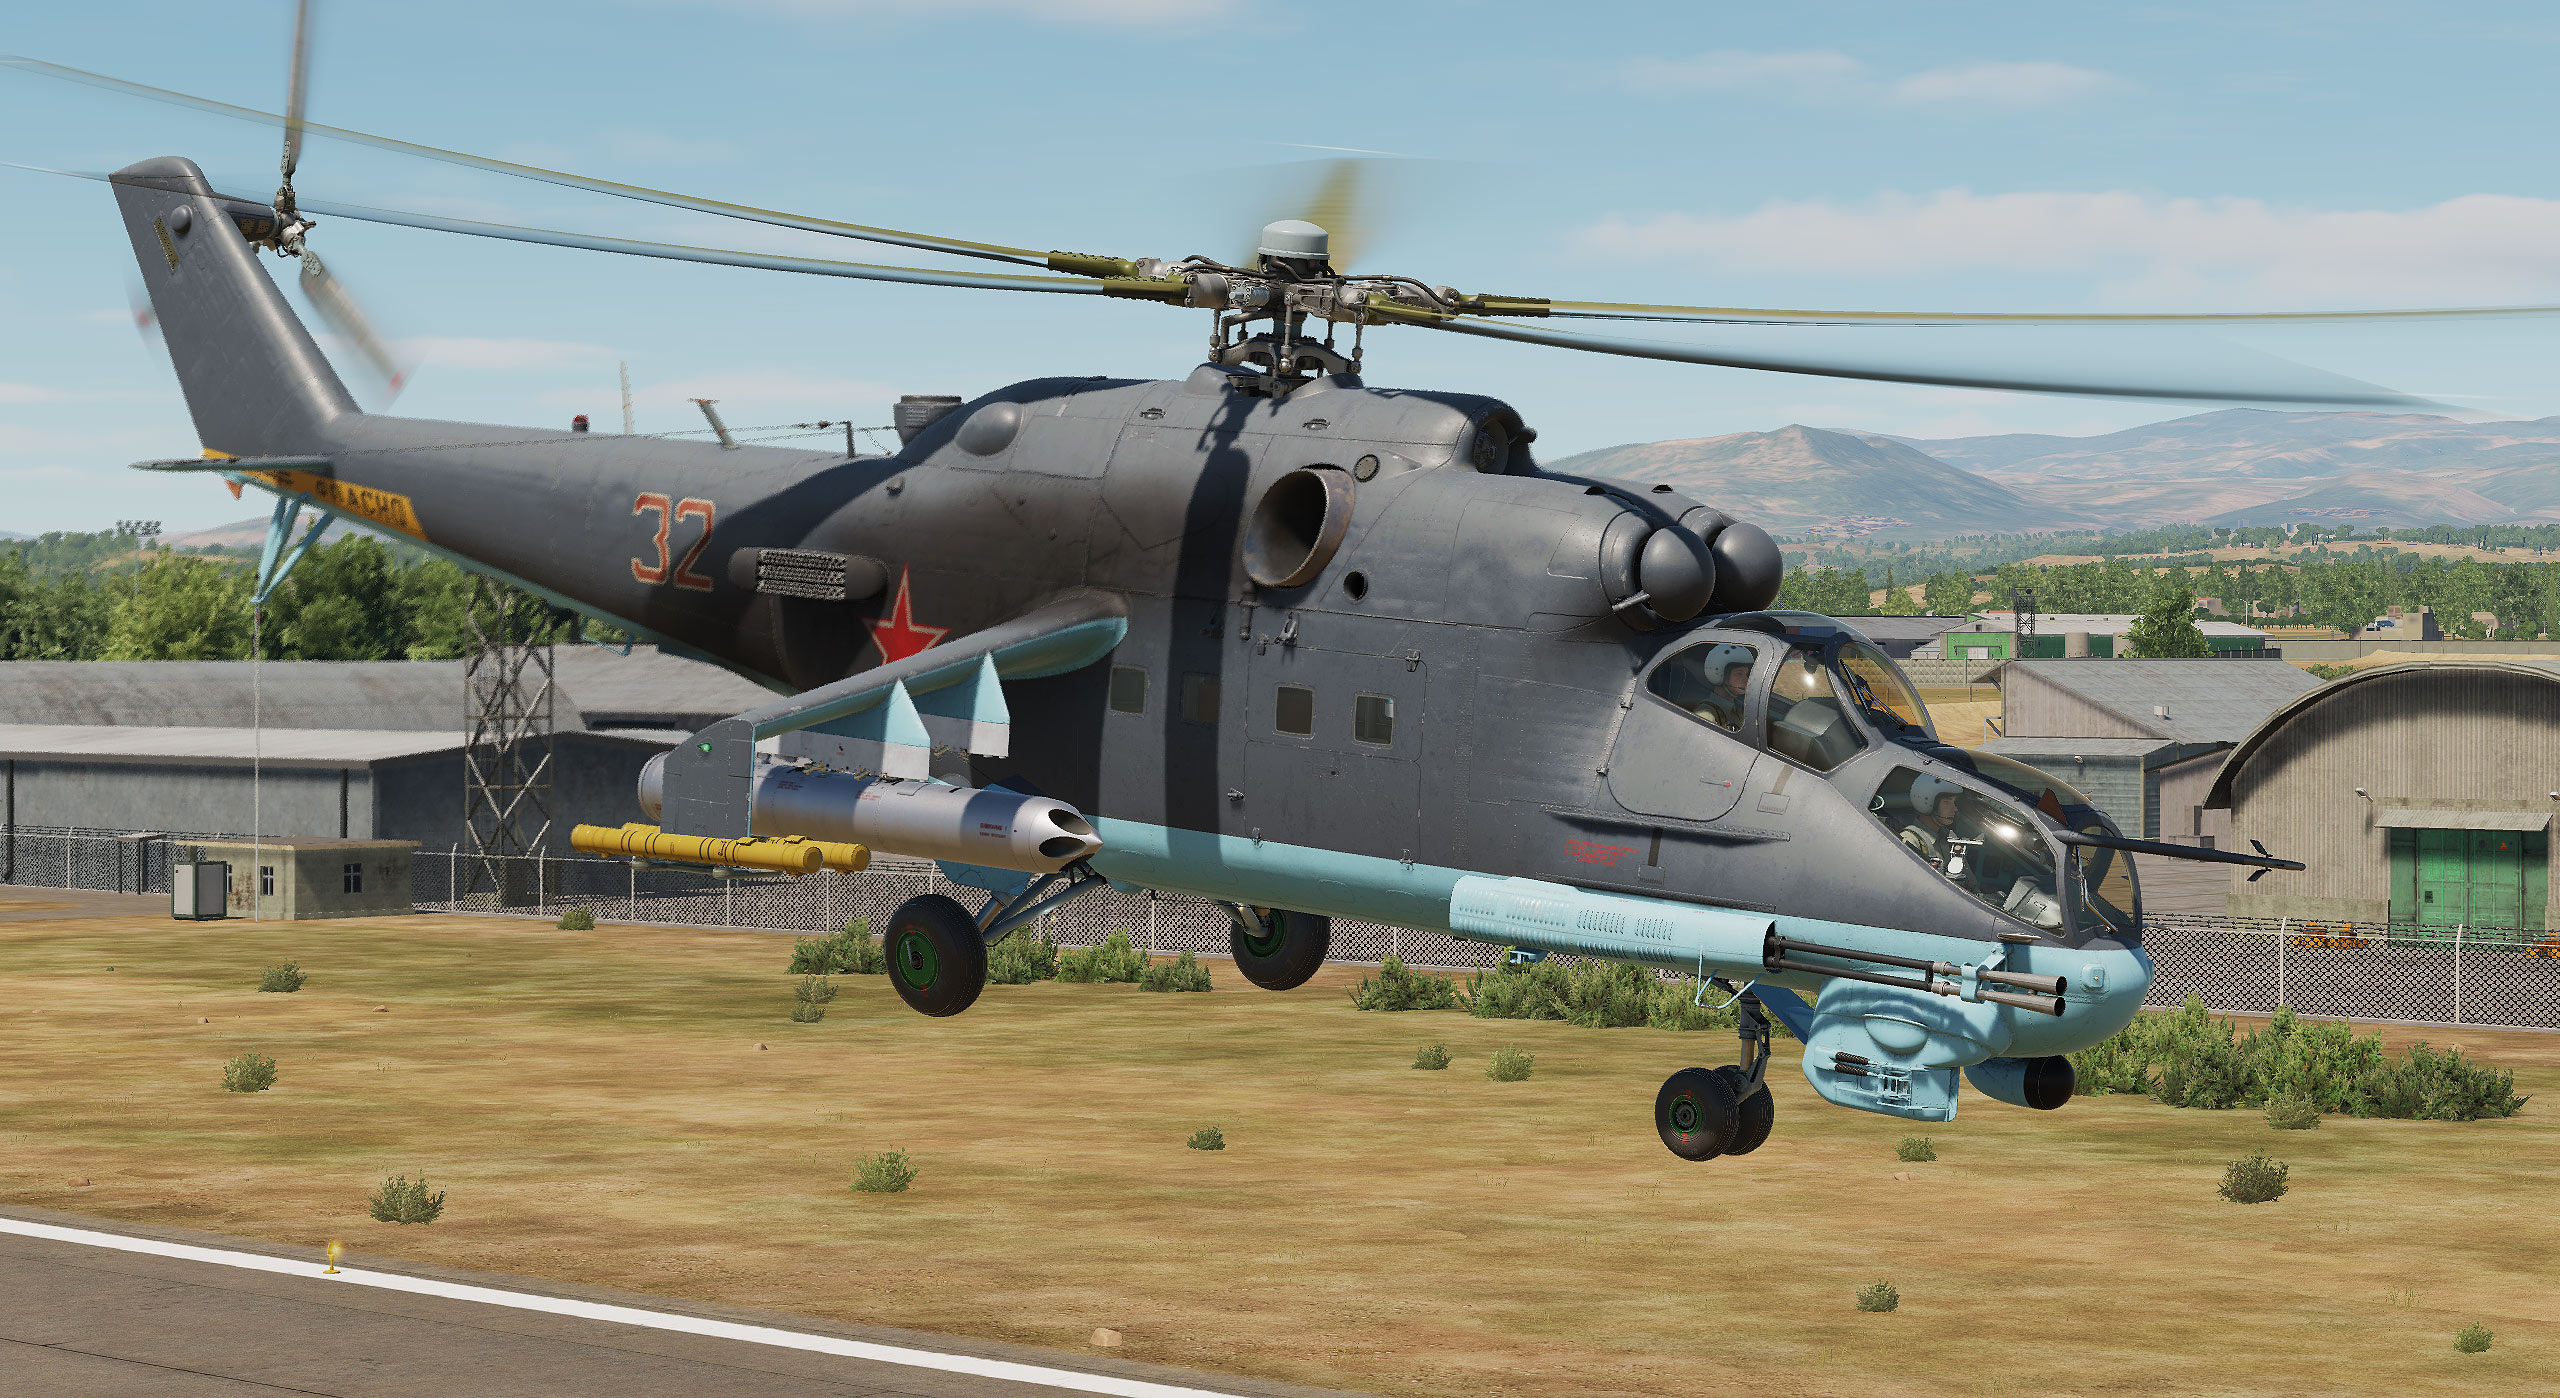 Mi-24P - VVS Frogfoot Scheme (Less Dirt)